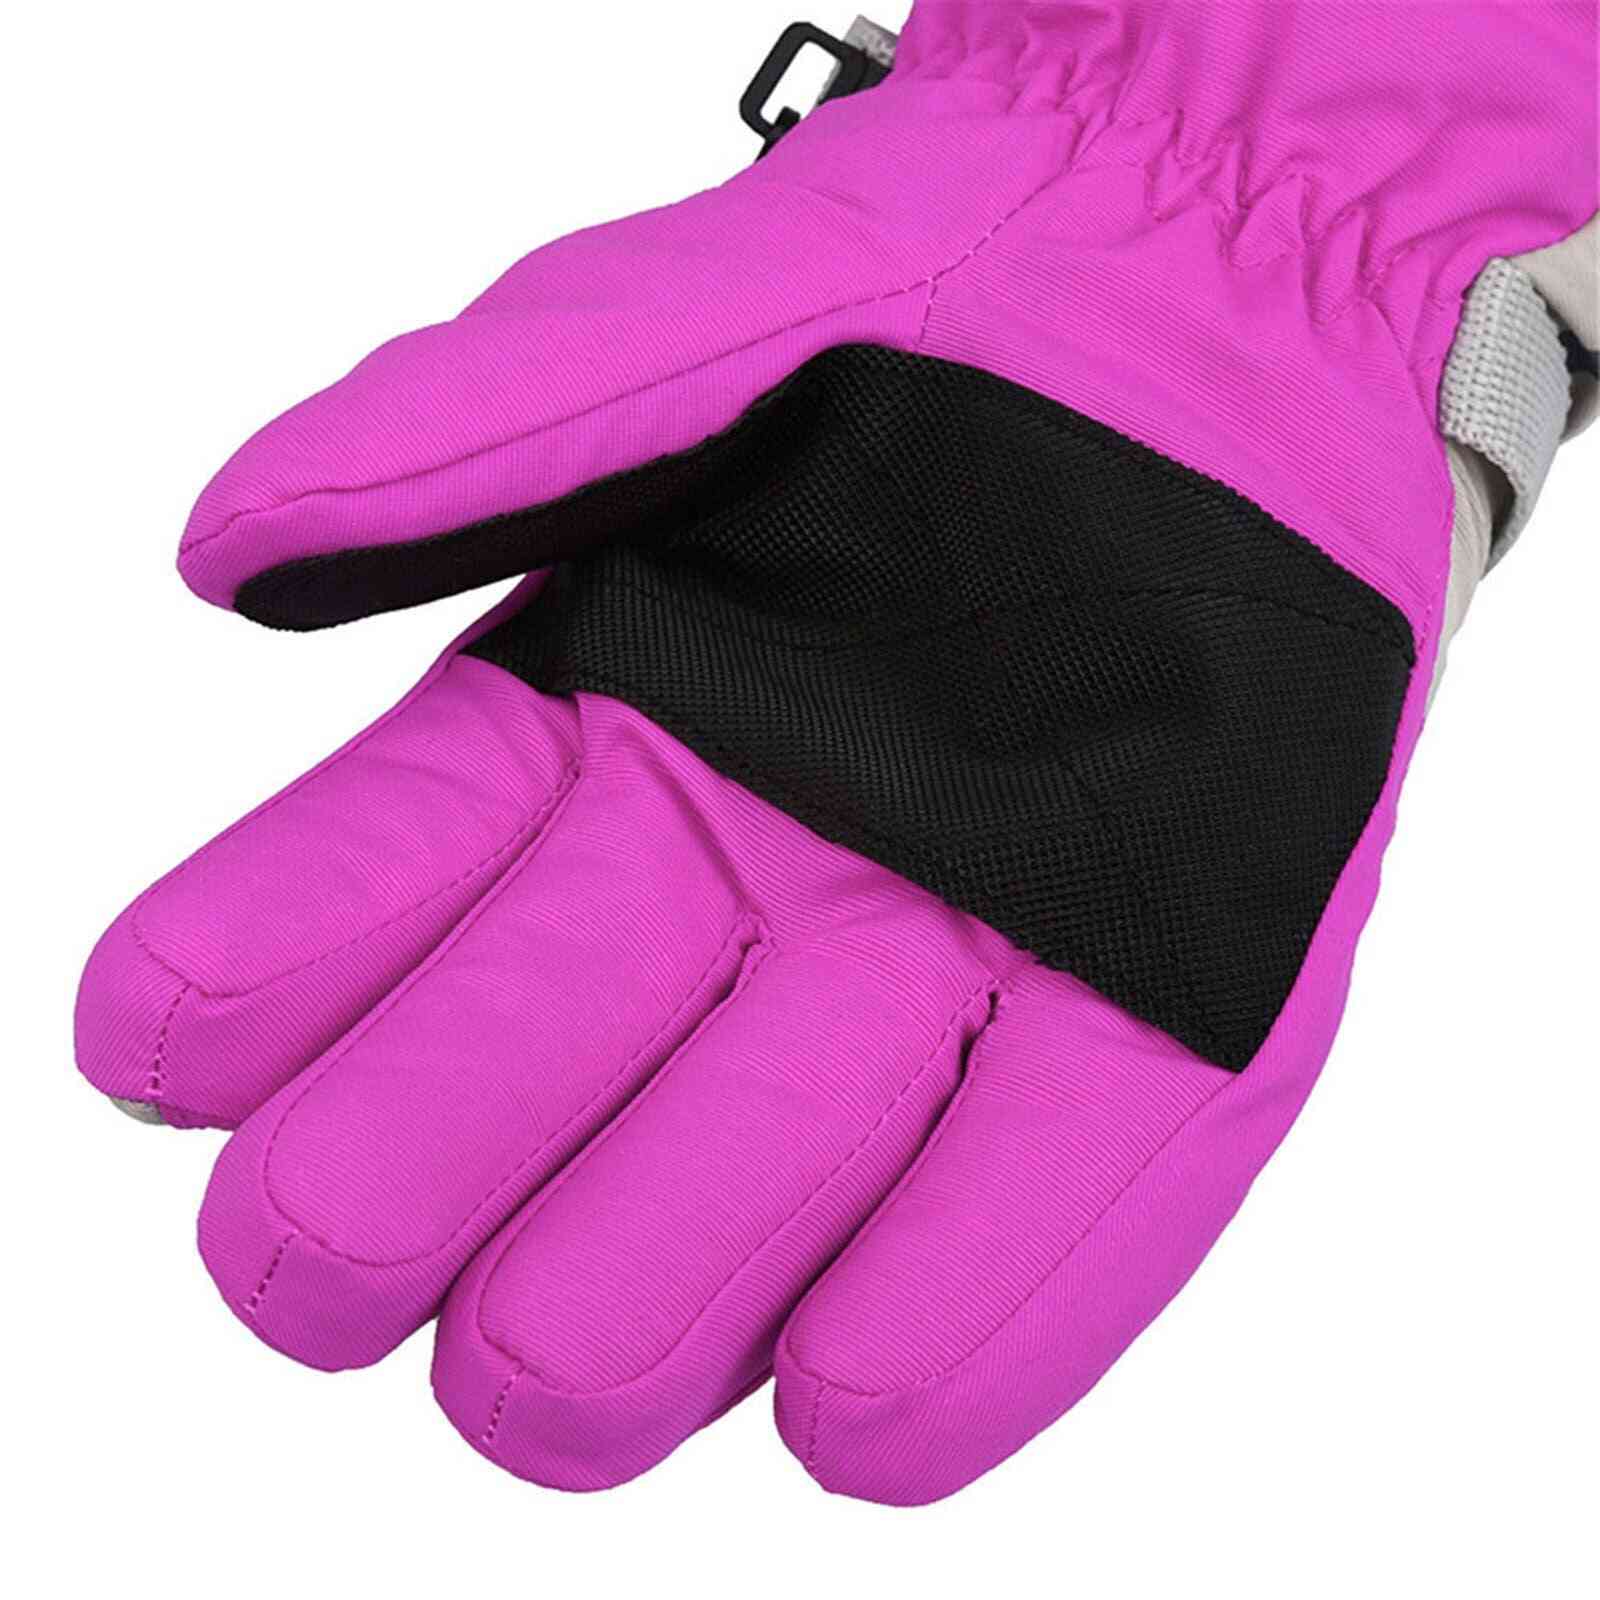 Winter Warm Waterproof Windproof Thick Ski Gloves